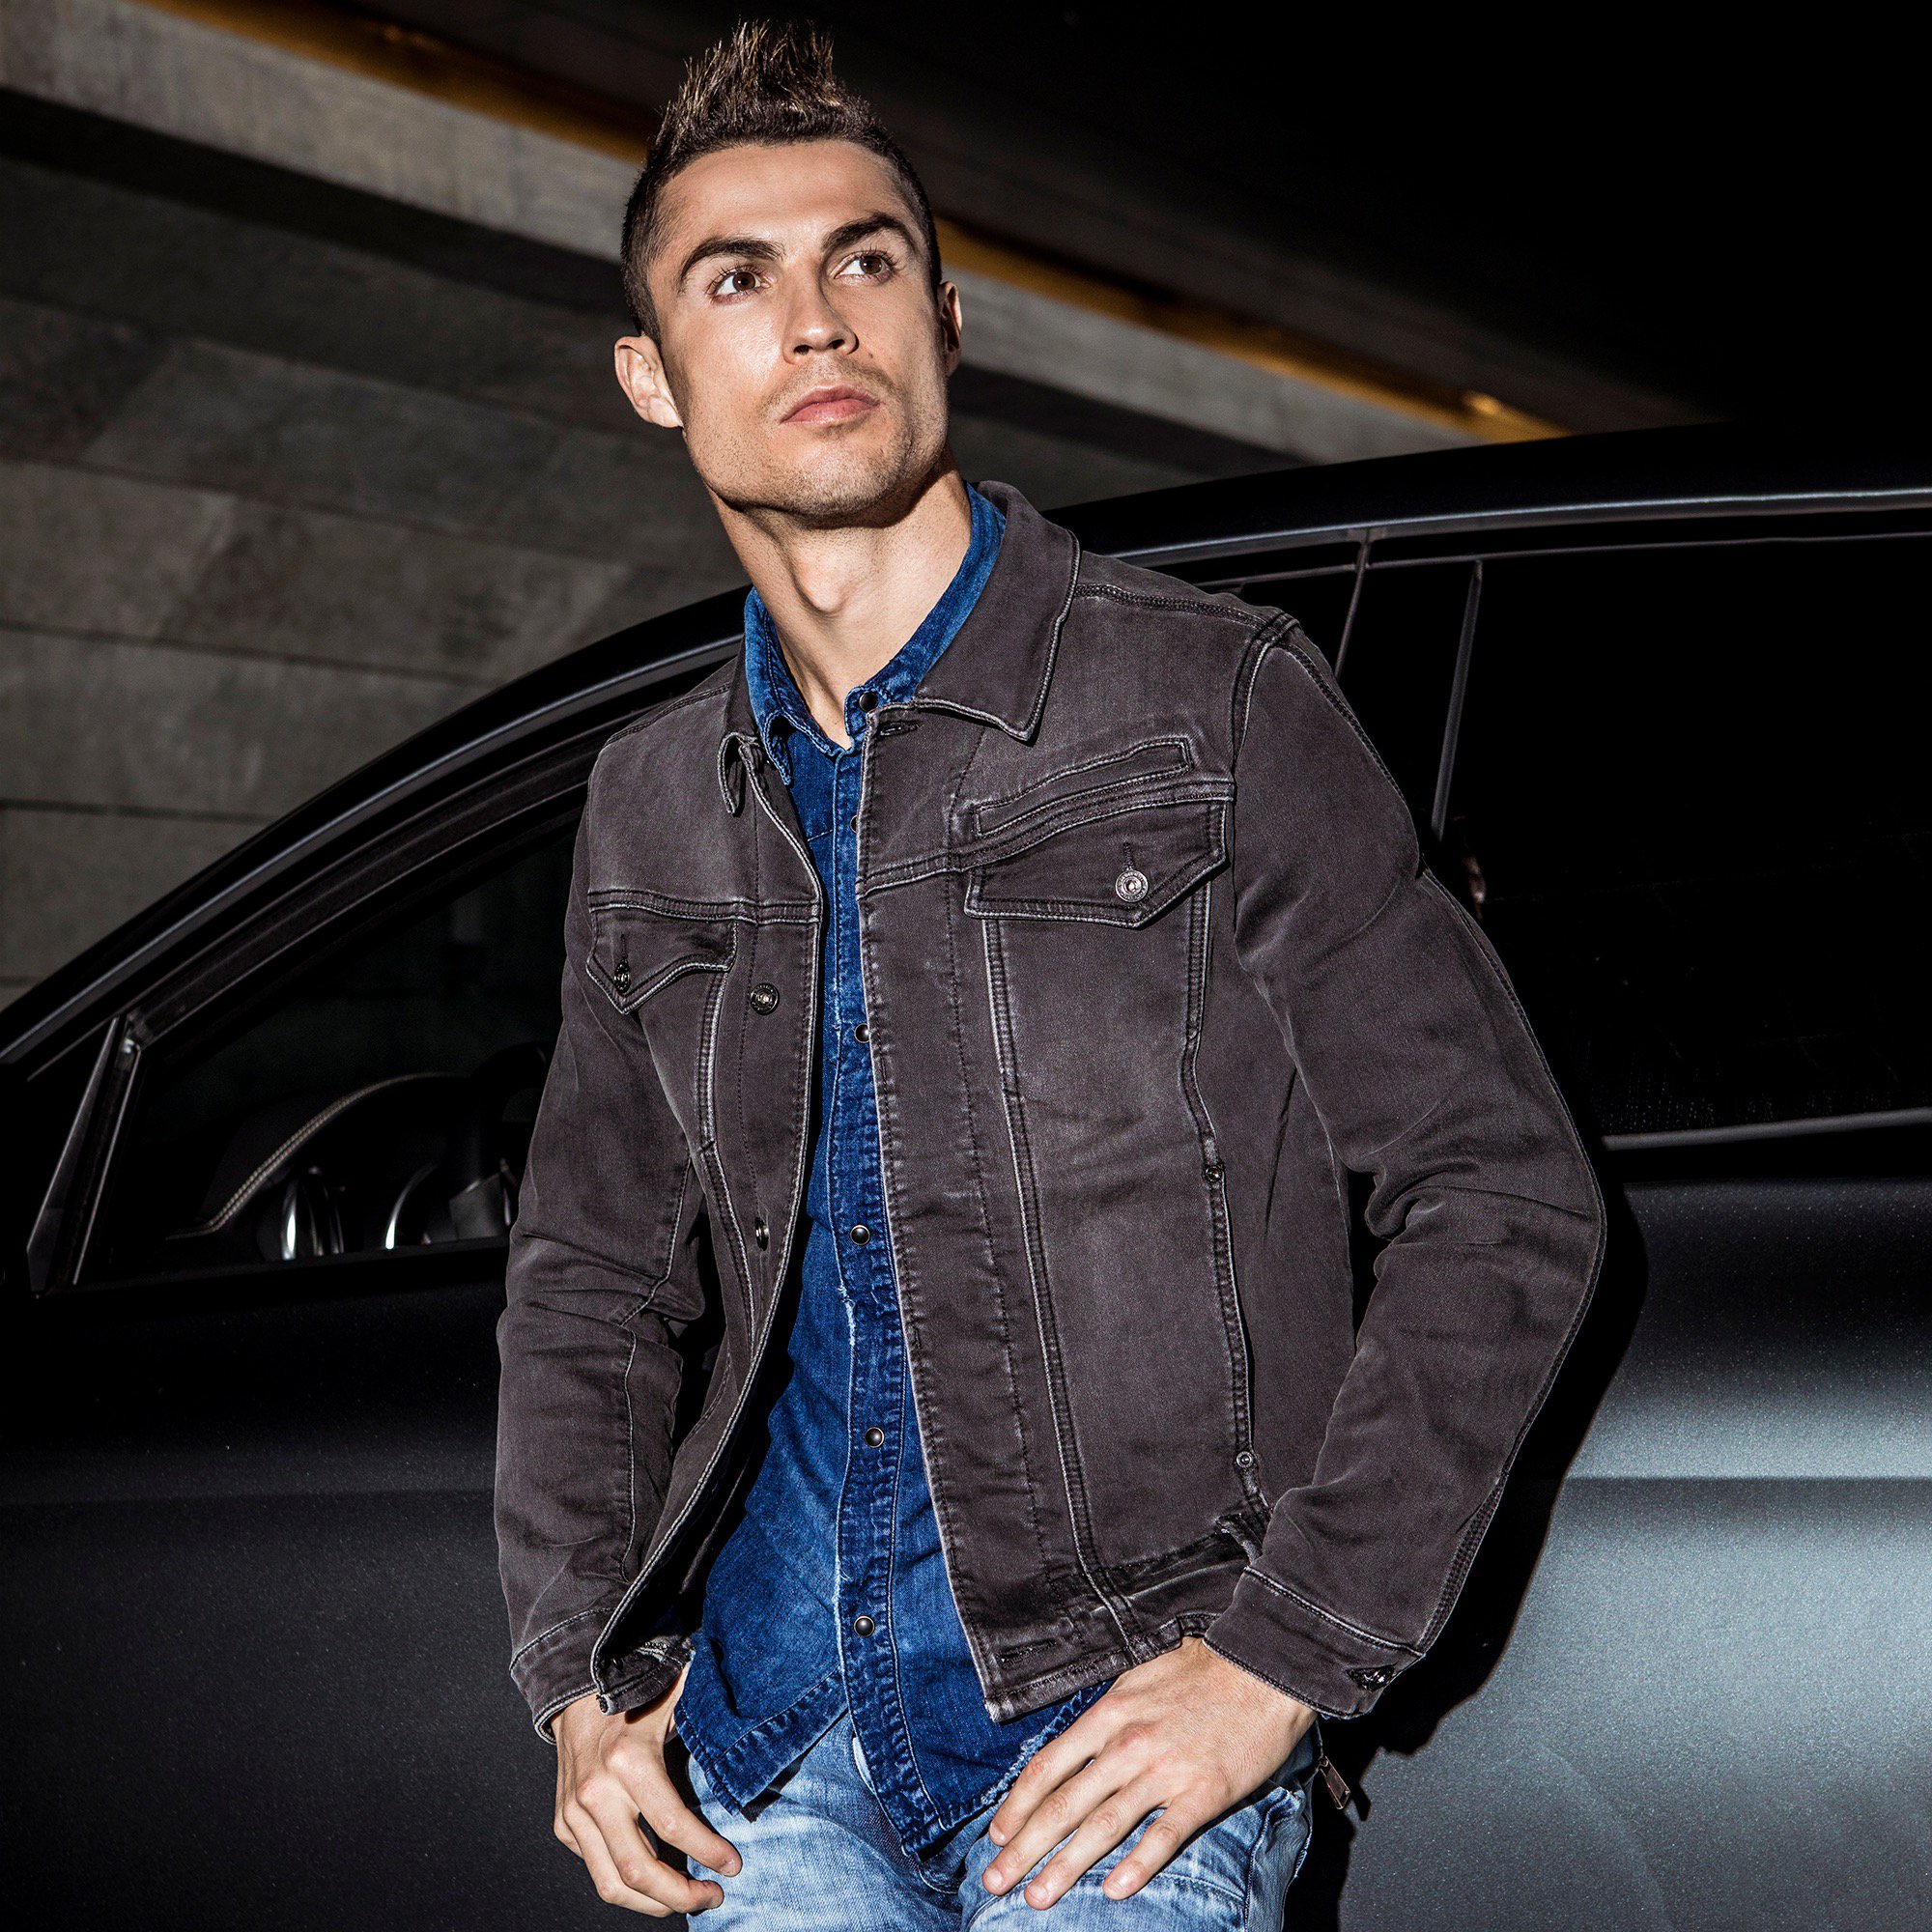 Cristiano Ronaldo on Twitter: "Denim on denim 👖 living in my CR7 jeans